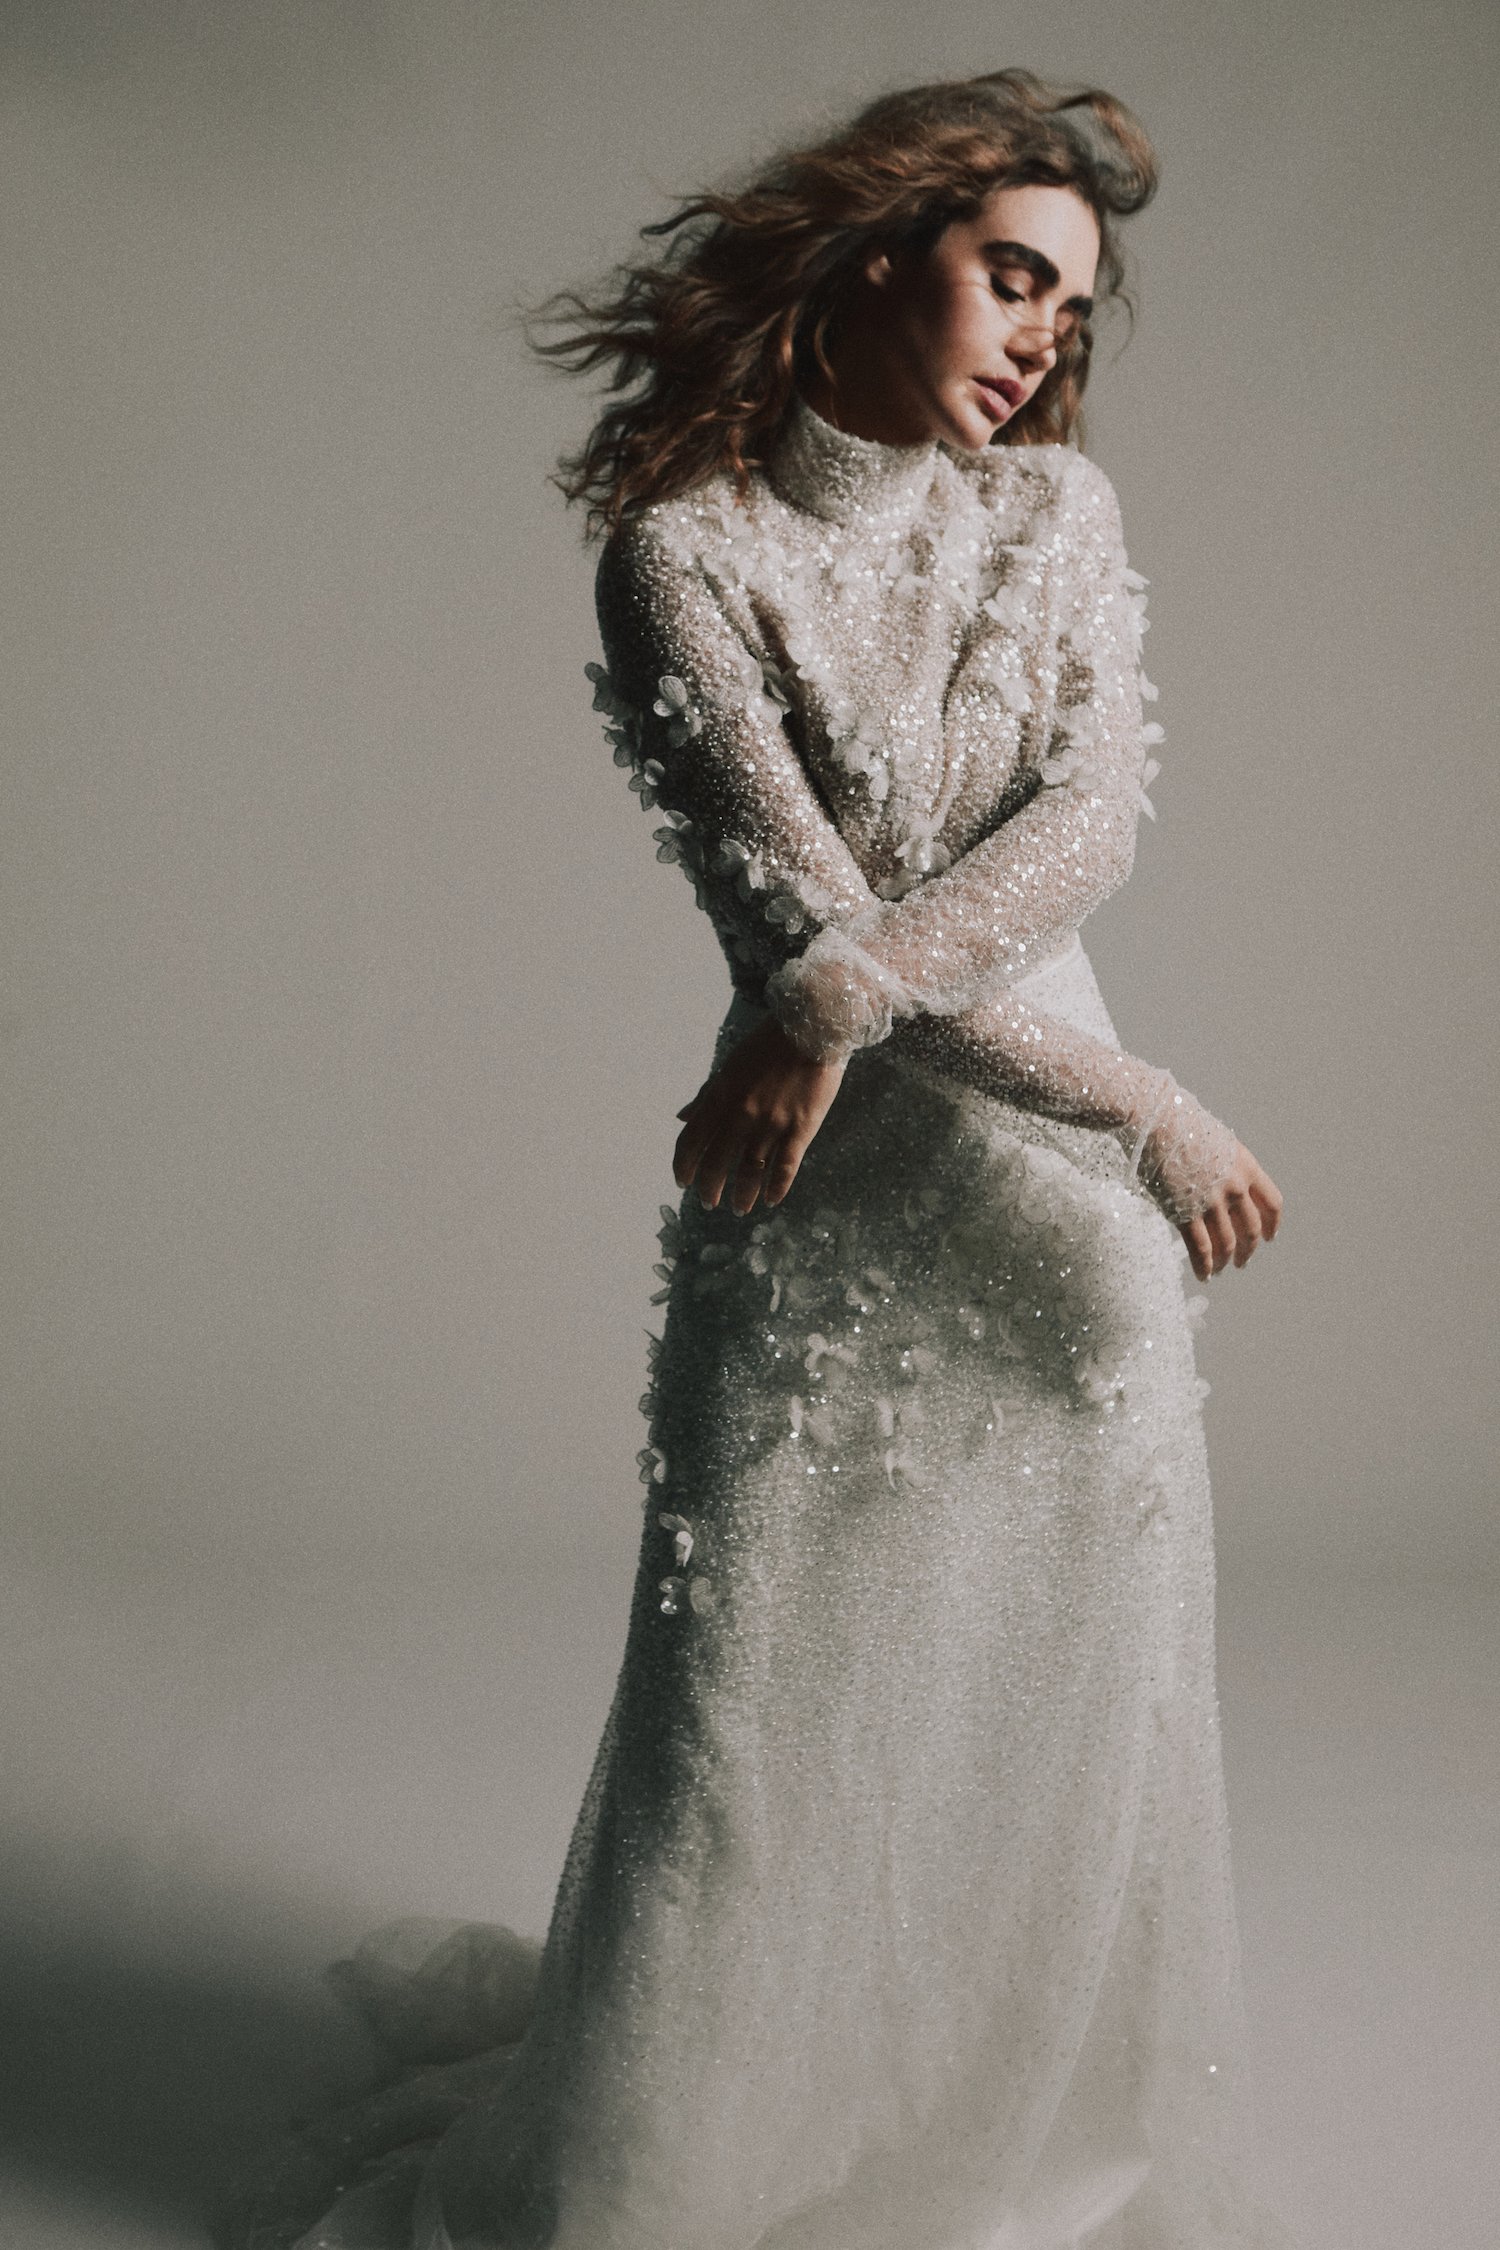 Fantasia sparkly high neck wedding dress with sleeves3 web.jpeg